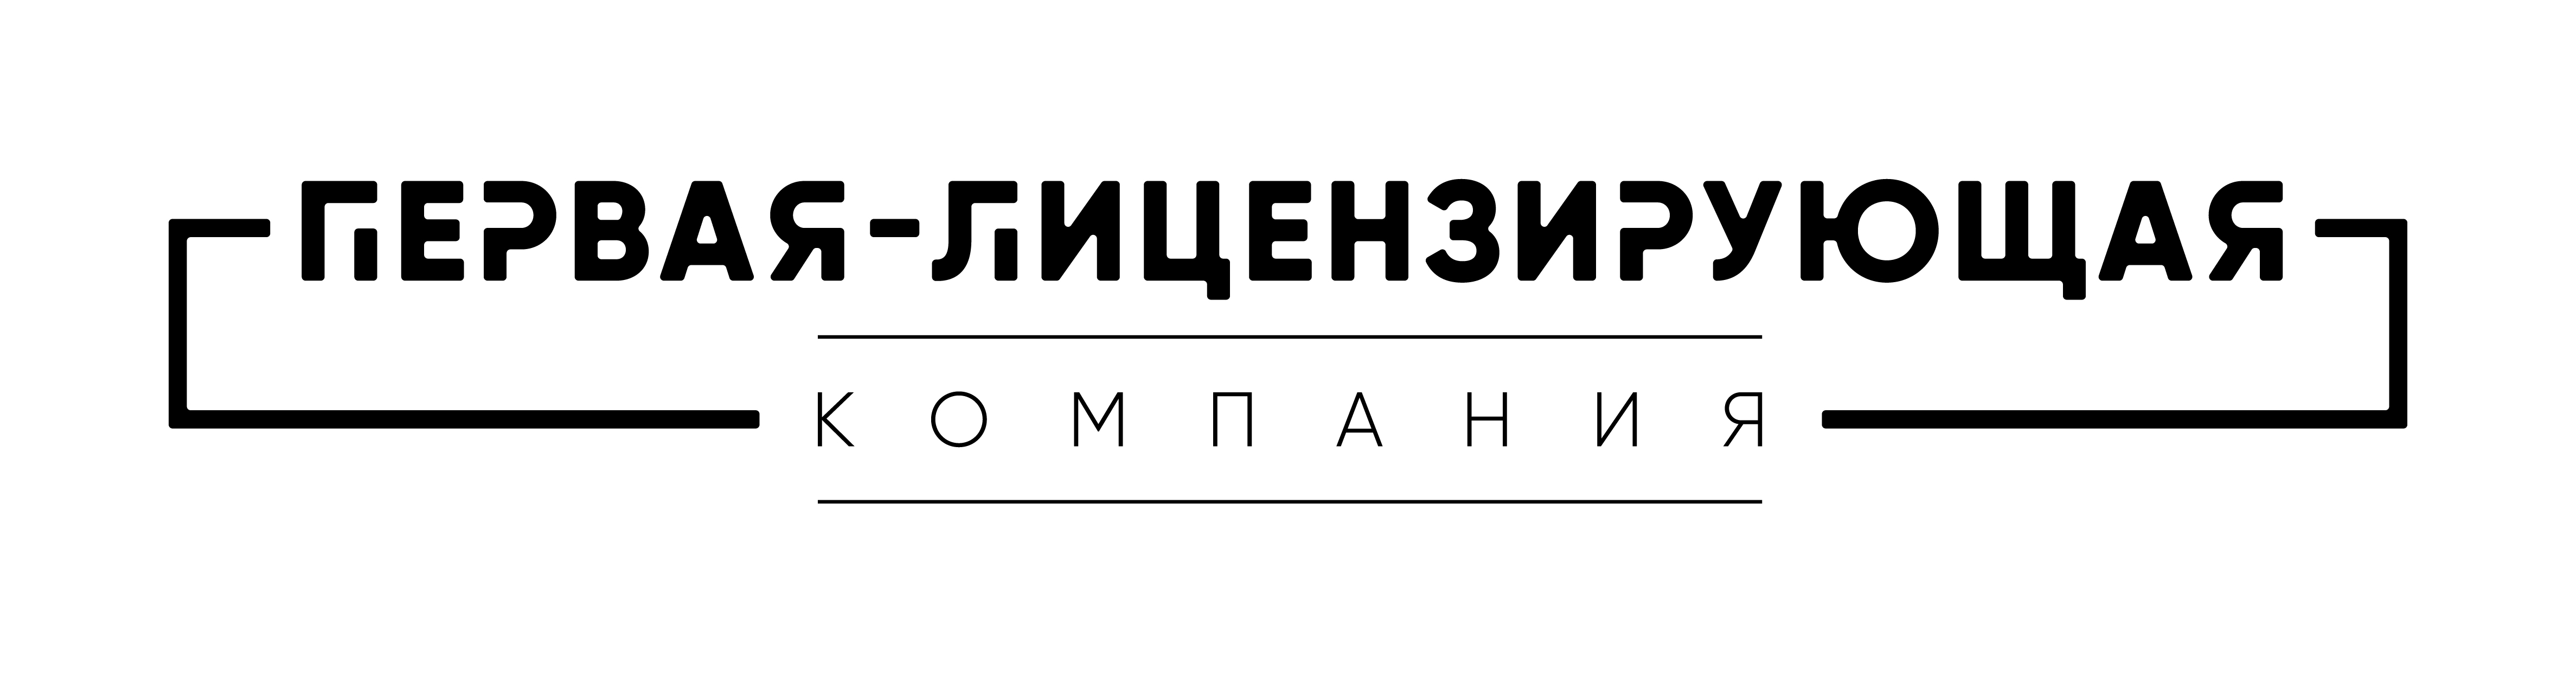 Логотип ооо Центр развития